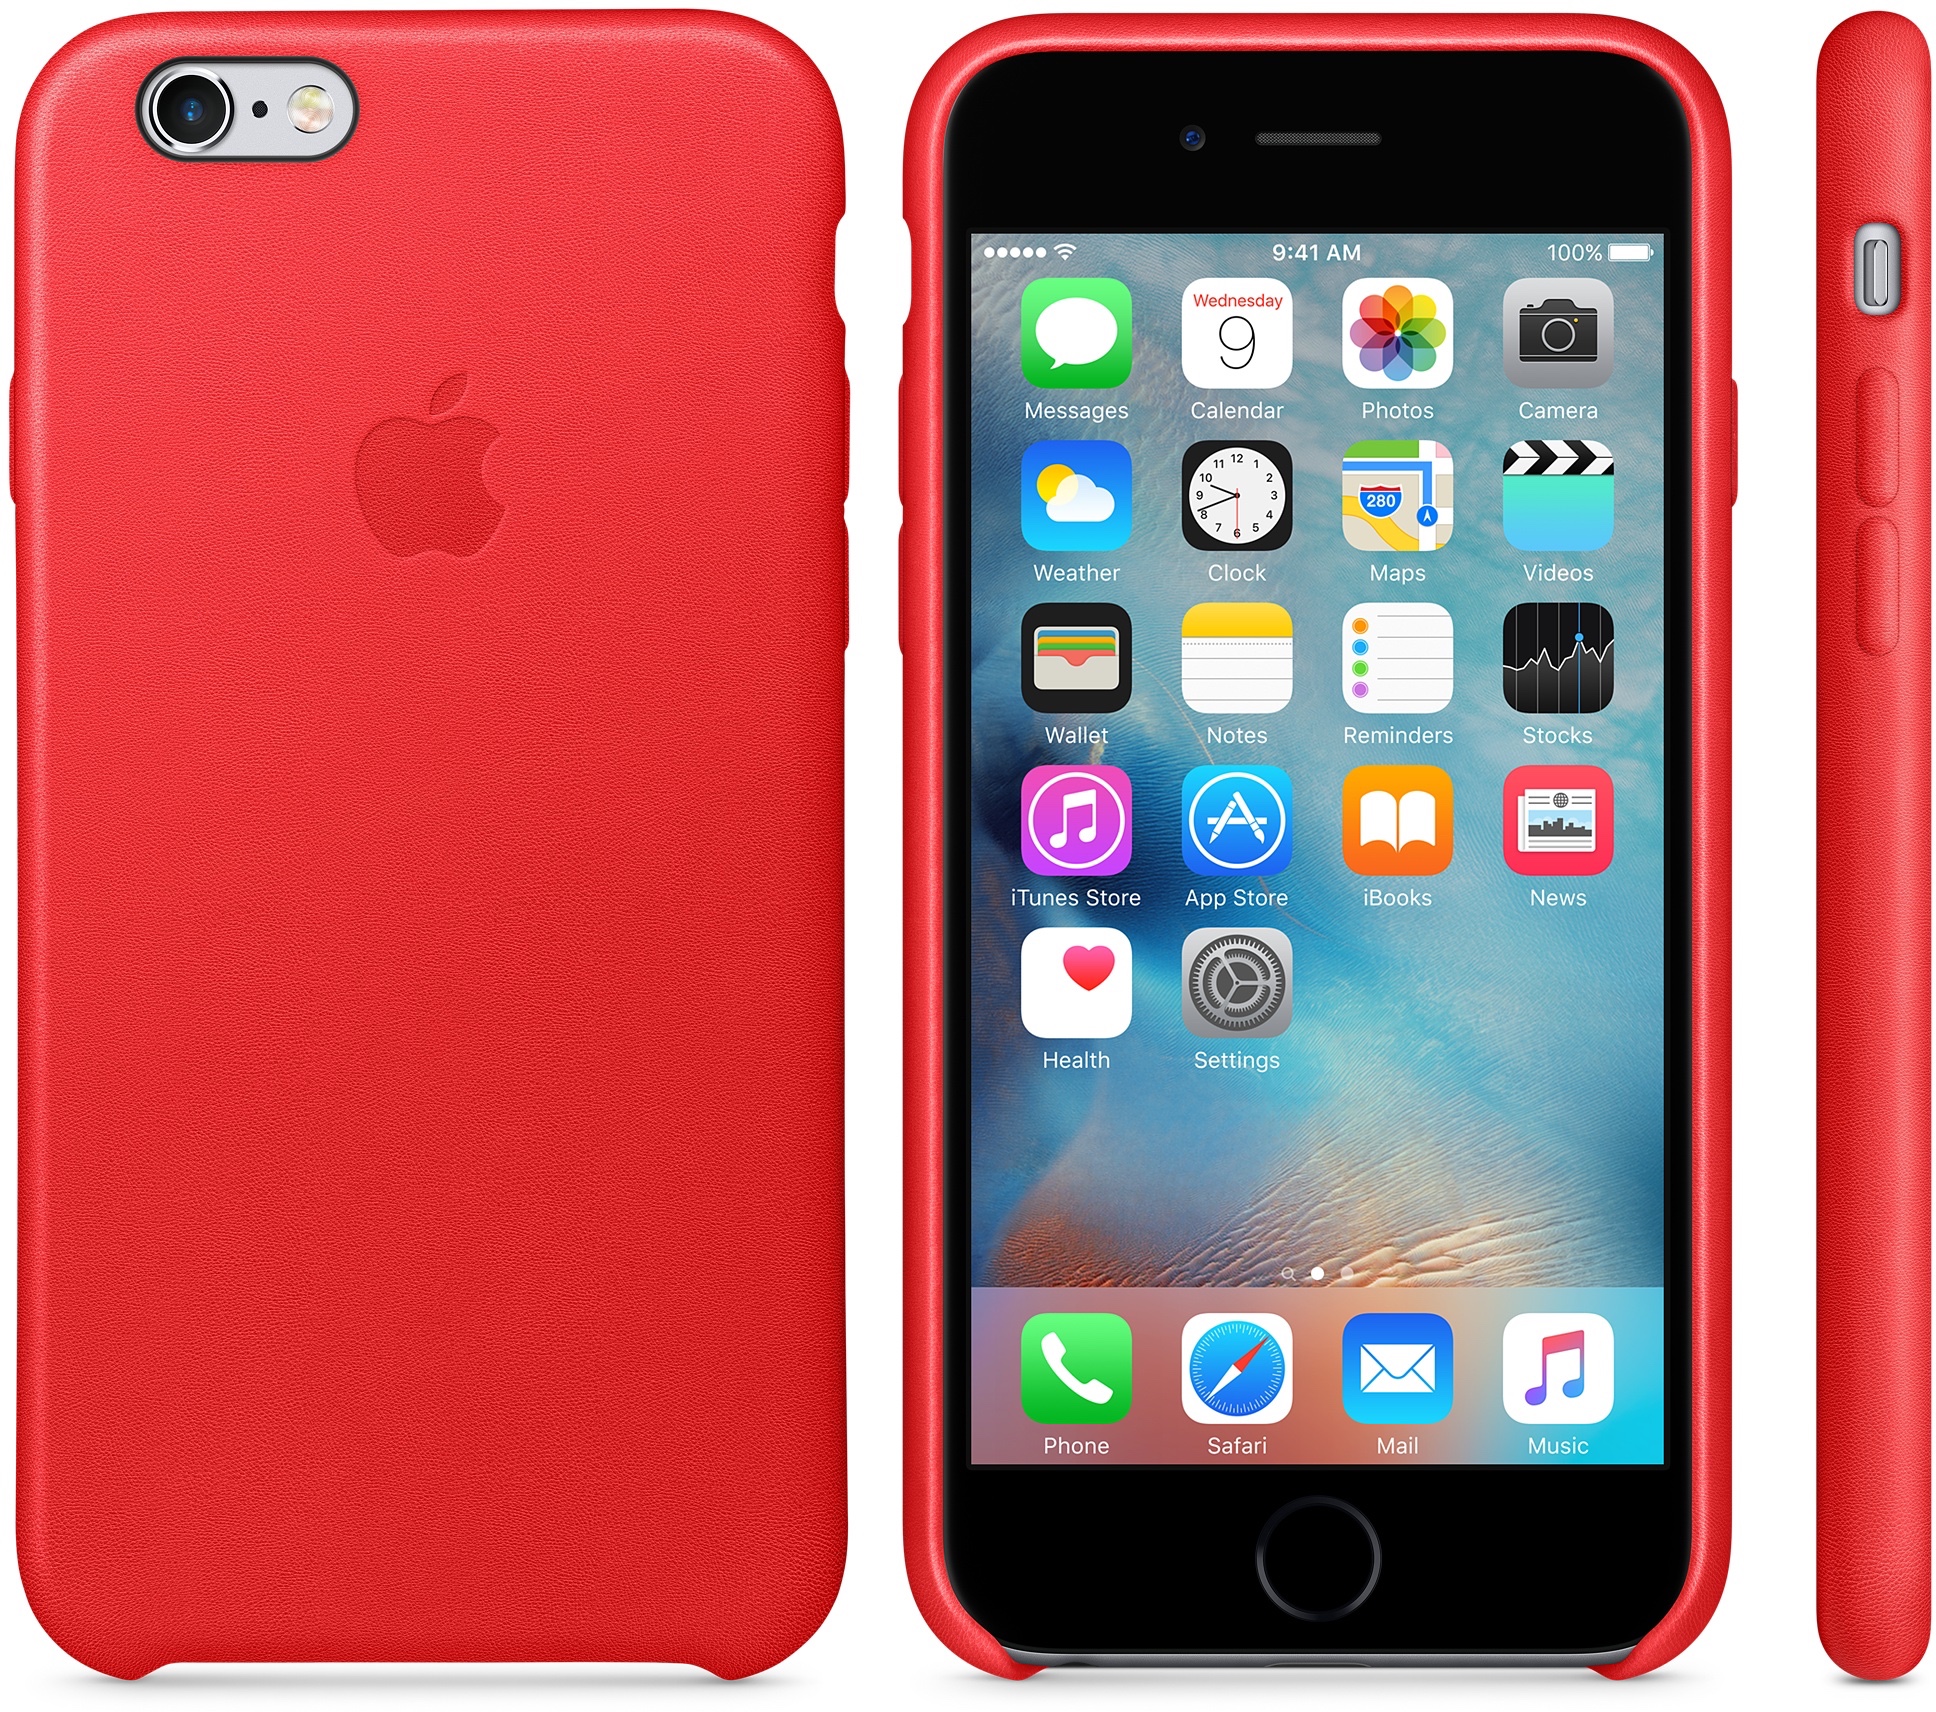 Case vermelha de couro para iPhones 6s (PRODUCT)RED